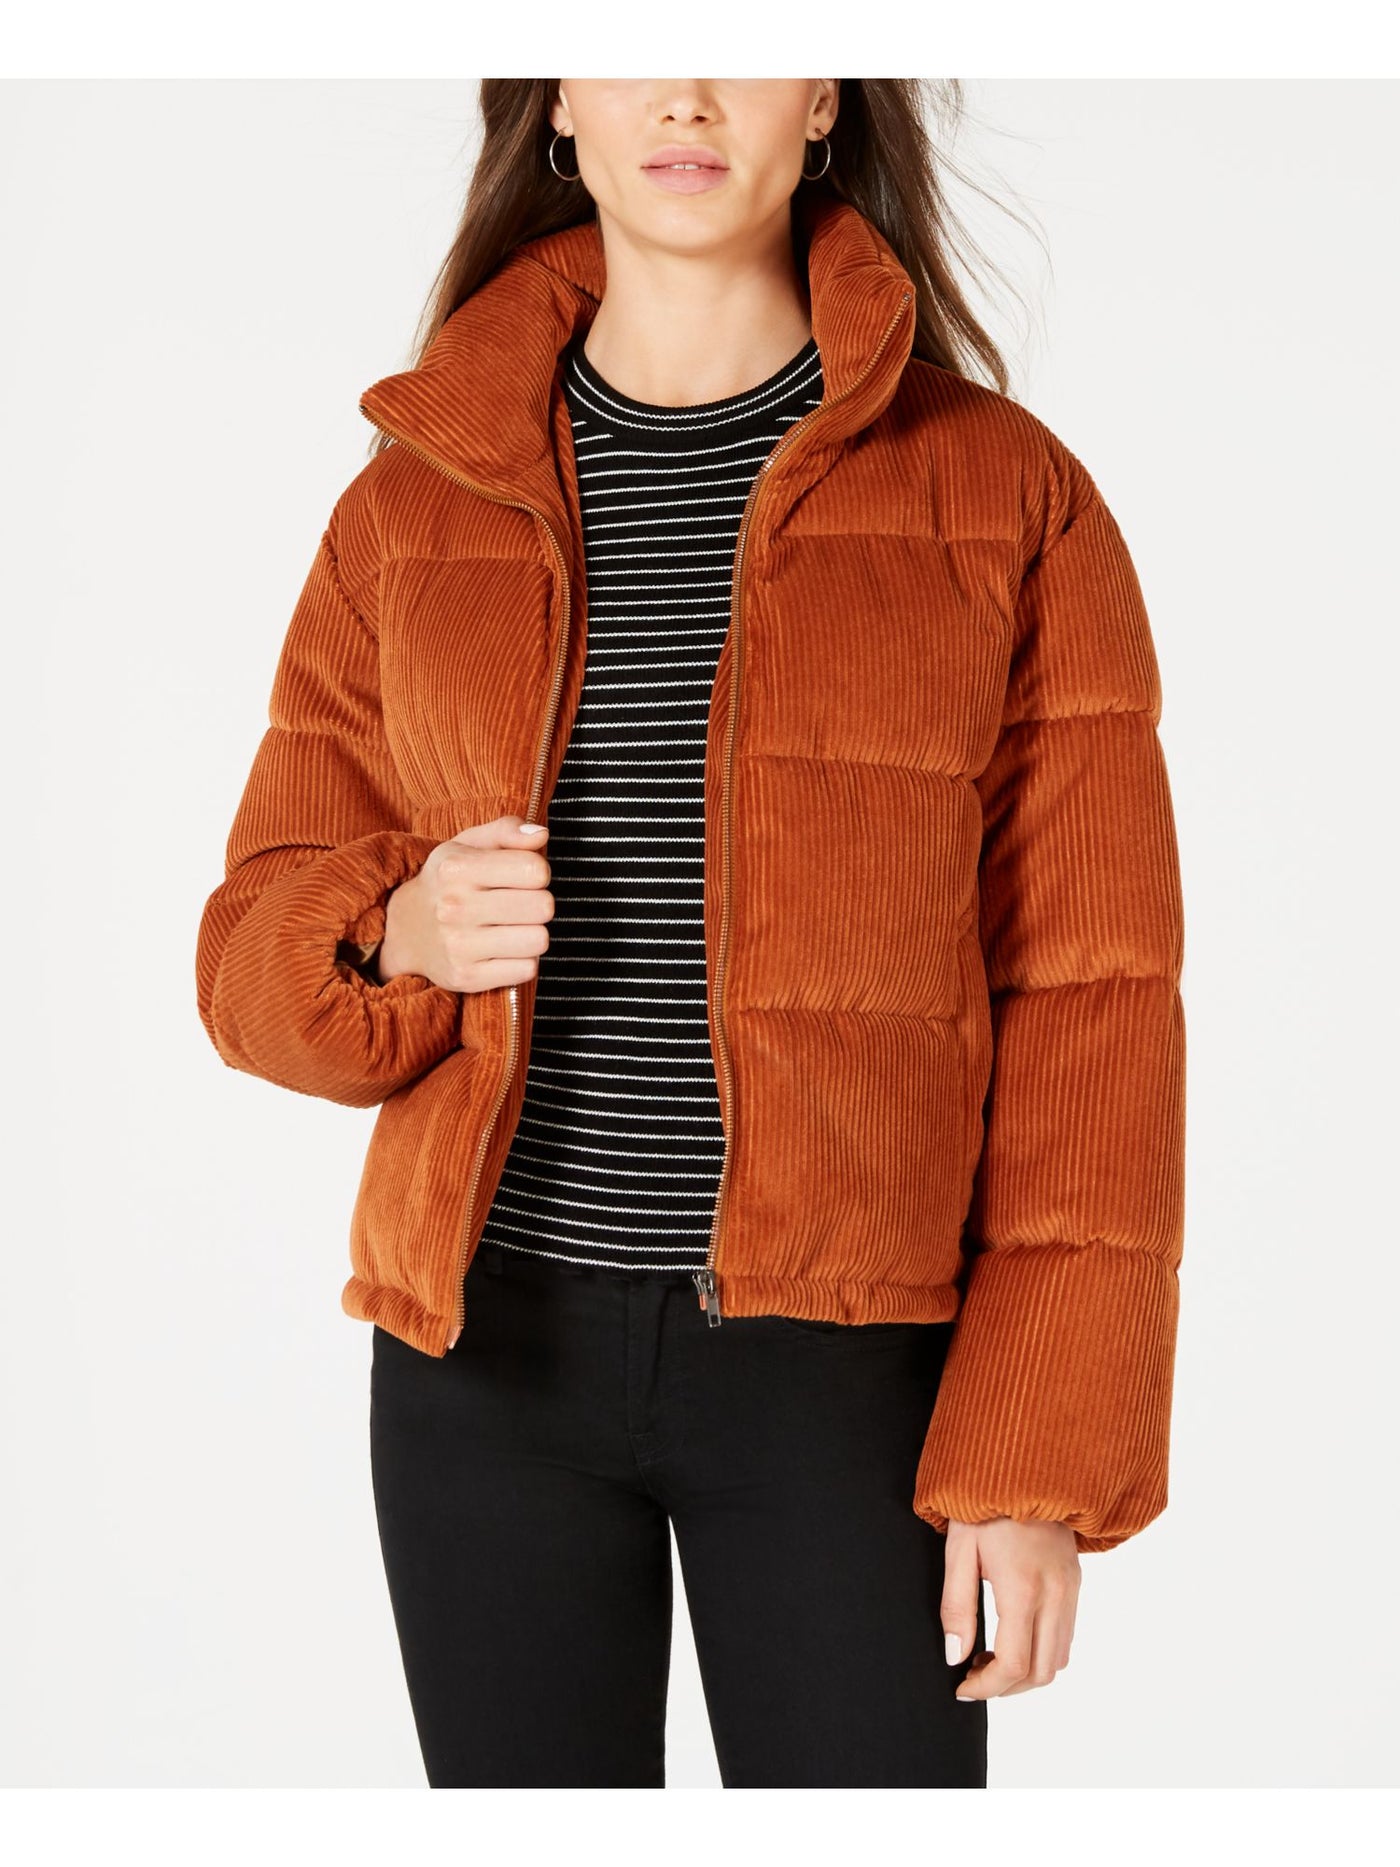 COLLECTIONB Womens Orange Textured Pocketed Puffer Winter Jacket Coat Juniors XXL